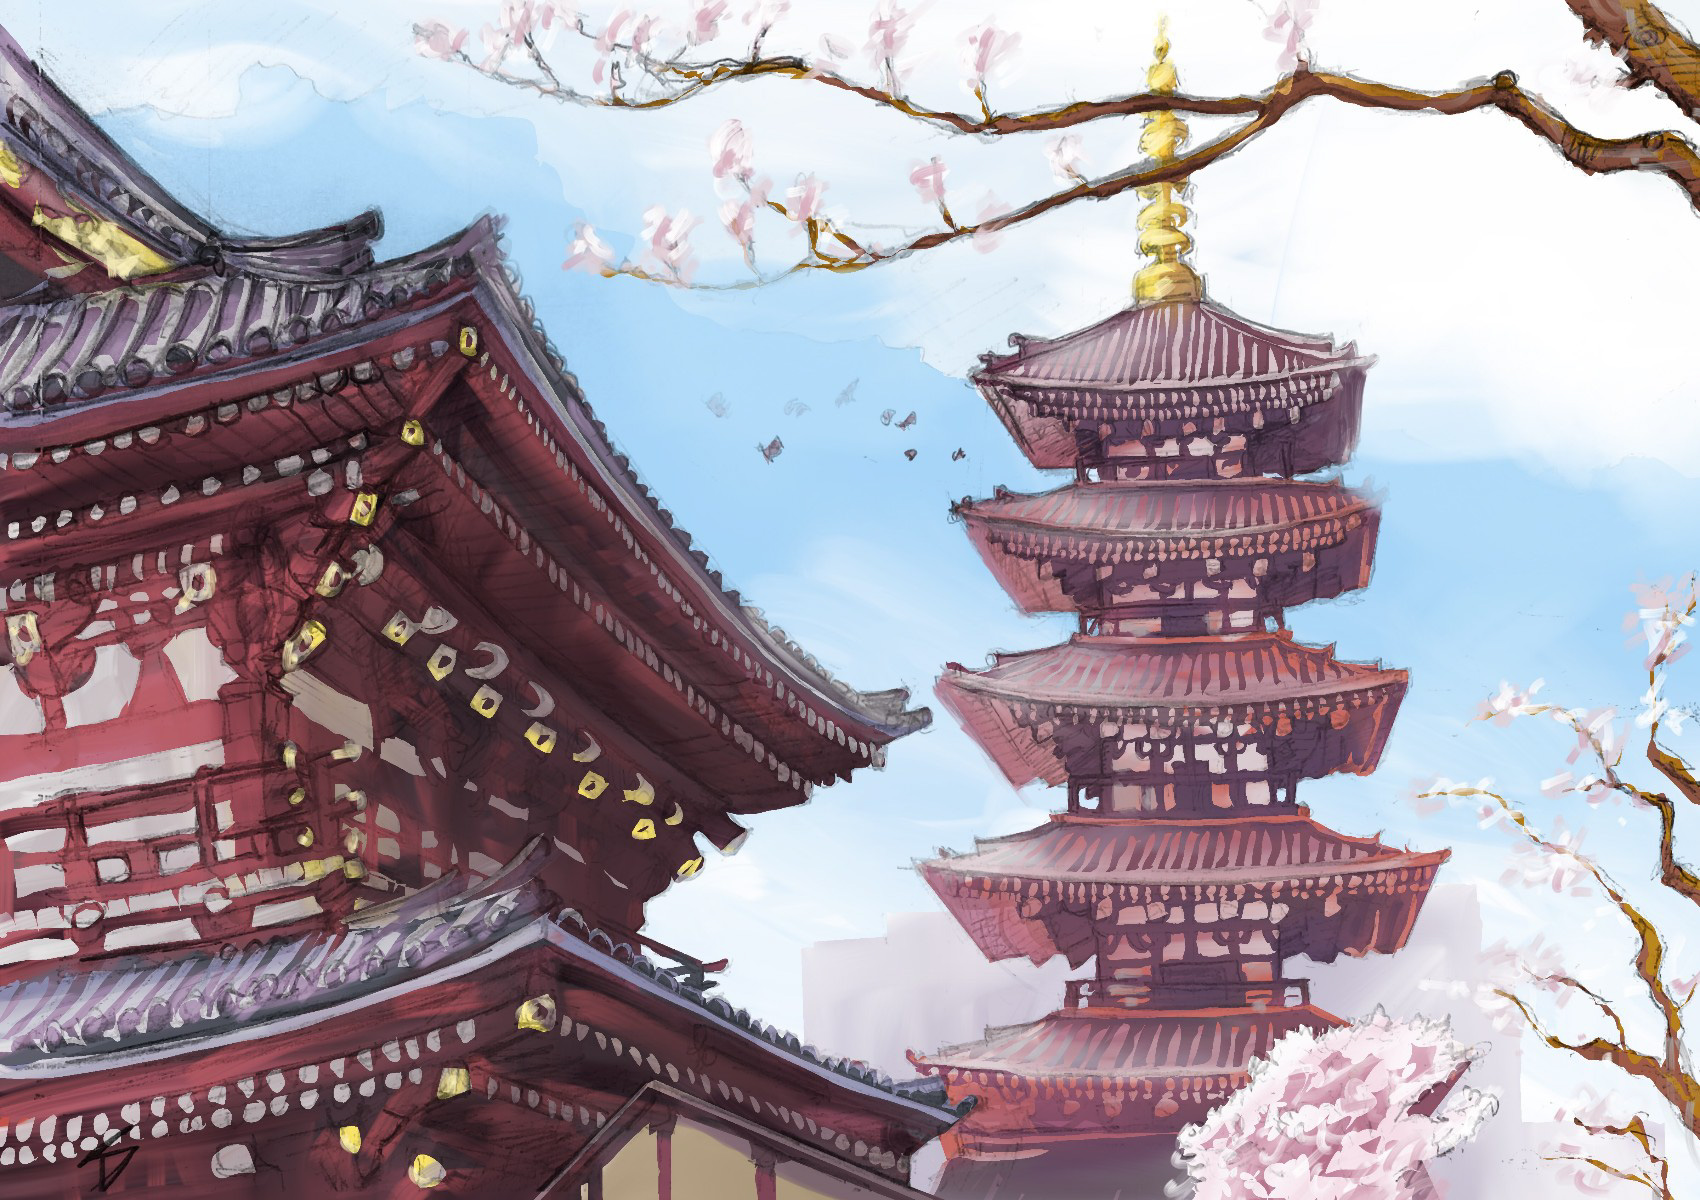 Ipad art – Asakusa, Tokyo, Japan. ‘Senso-ji Temple.’ Complete image from my latest travel art blog article 'Sakura Japan.' Now online - sketchbookexplorer.com @davidasutton @sketchbookexplorer Facebook.com/davidanthonysutton #sketch #drawing #painting #art #ipadart #iPad #japan #tokyo #sakura #sensojitemple #buddhism #travel #travelblog #cherryblossom #cherryblossomseason #cherryblossomjapan